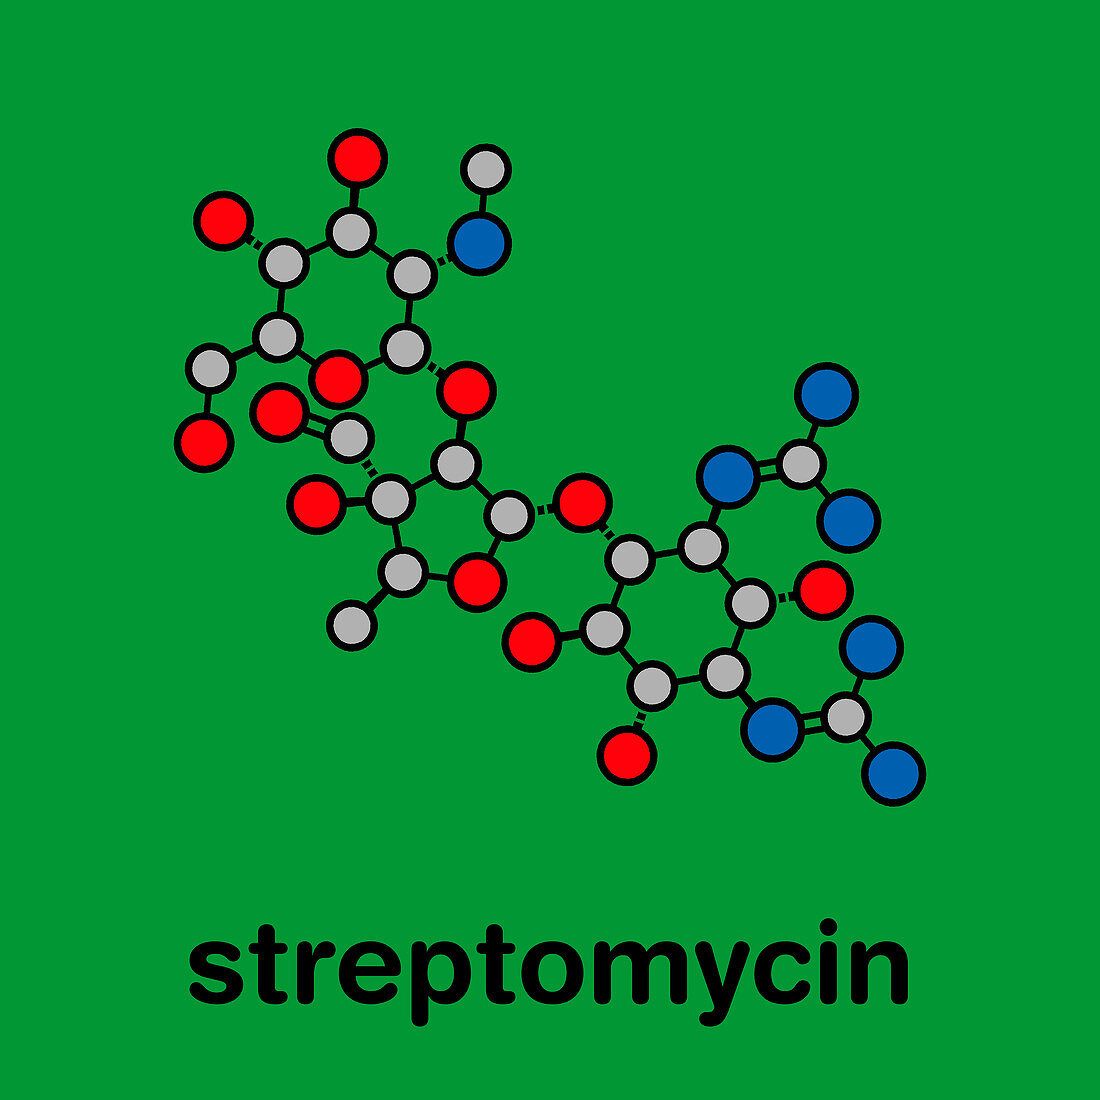 Streptomycin tuberculosis antibiotic drug, molecular model